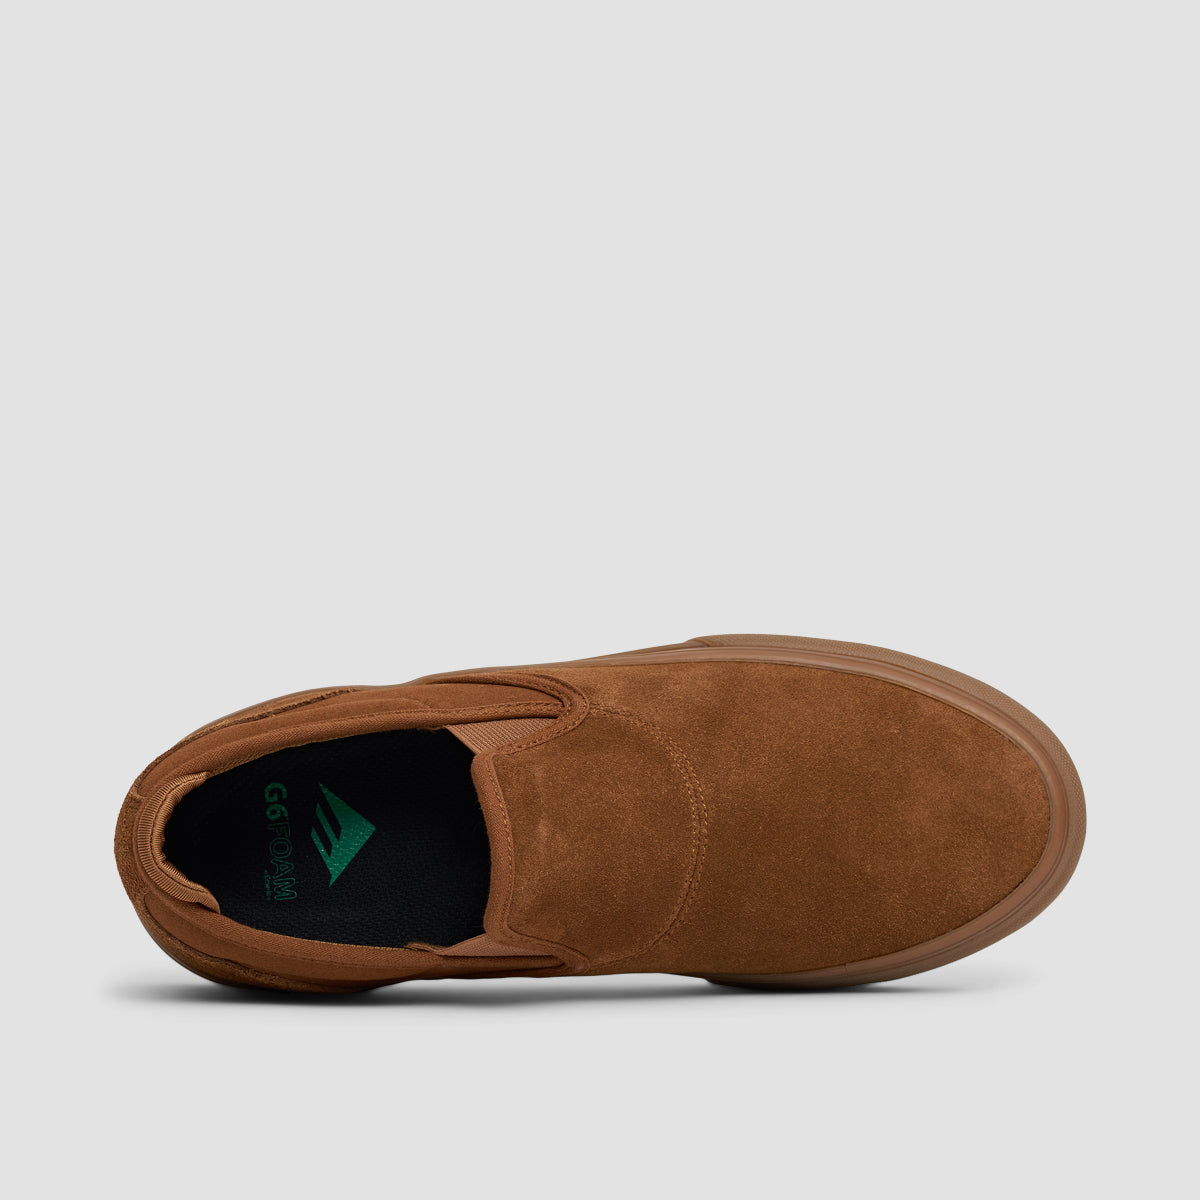 Emerica Wino G6 Slip-On Shoes - Brown/Gum